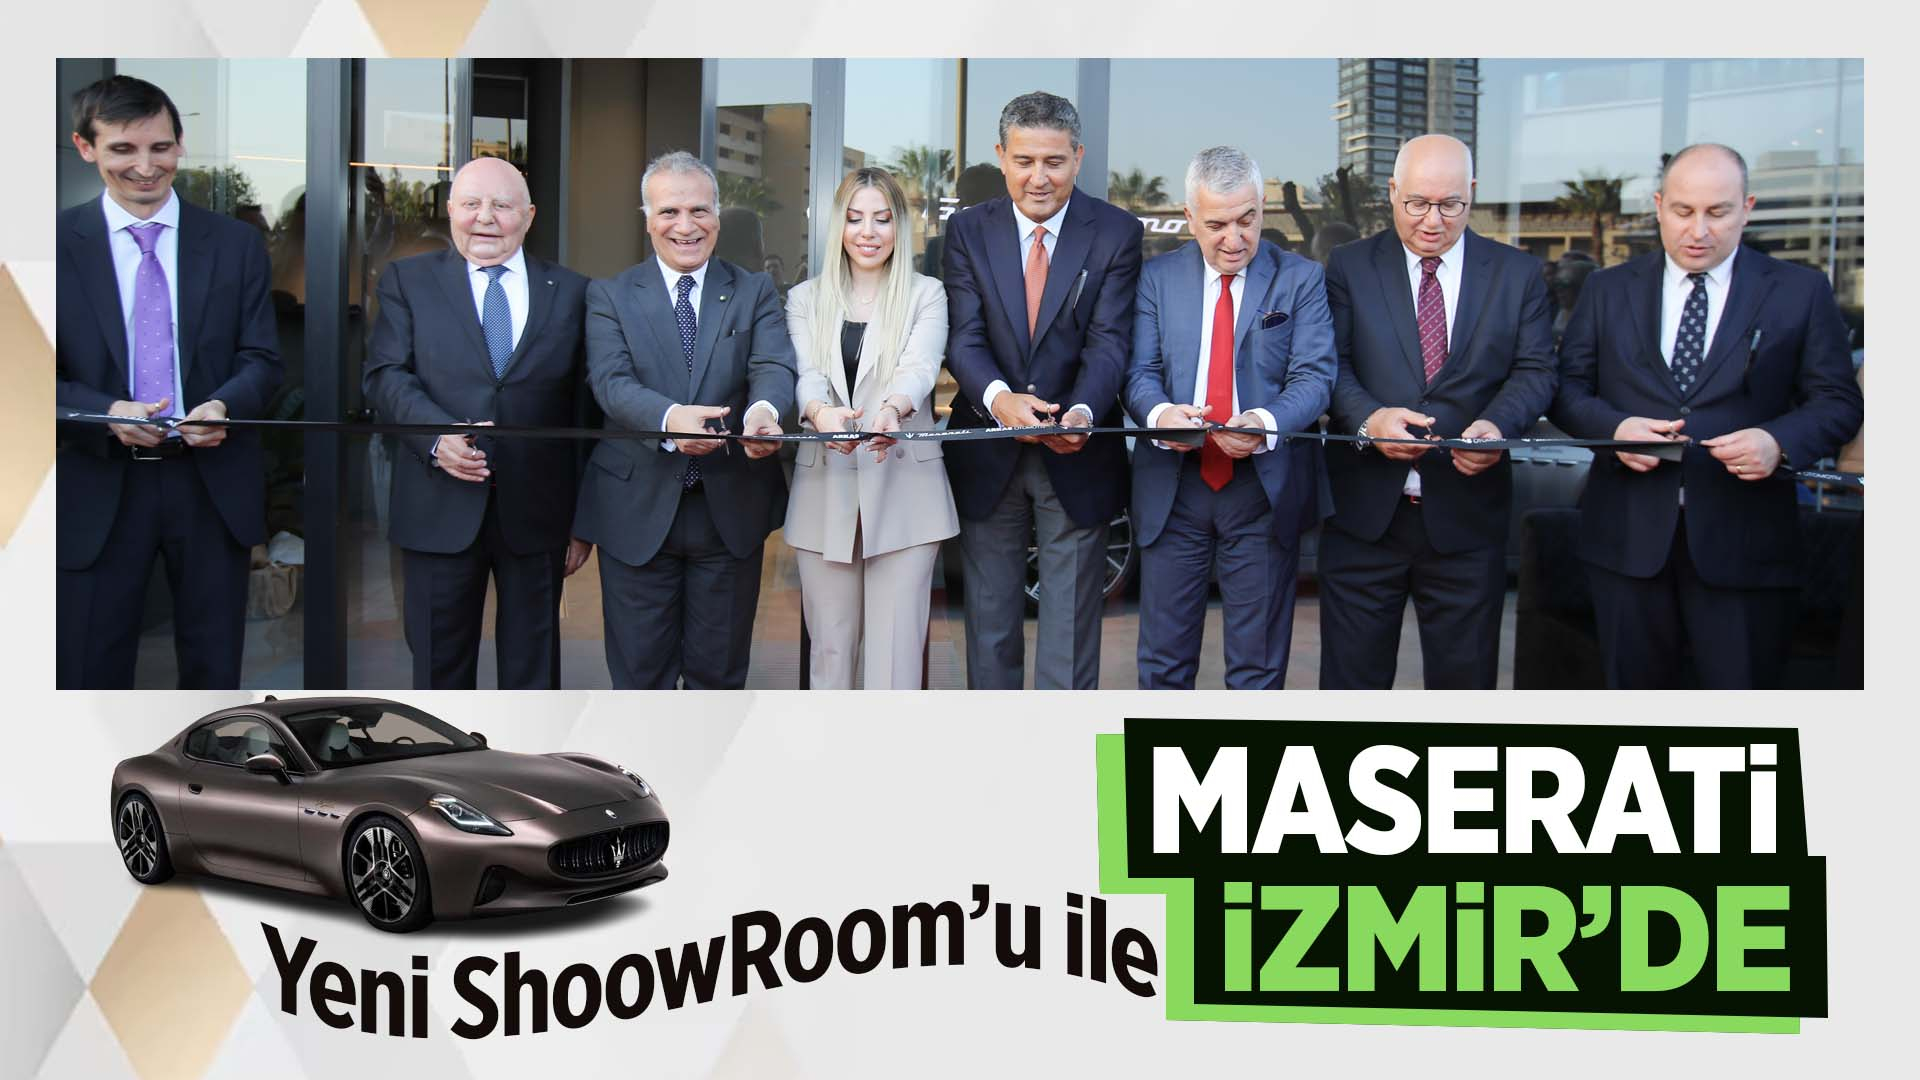 Maserati yeni showroomu ile İzmir’de 